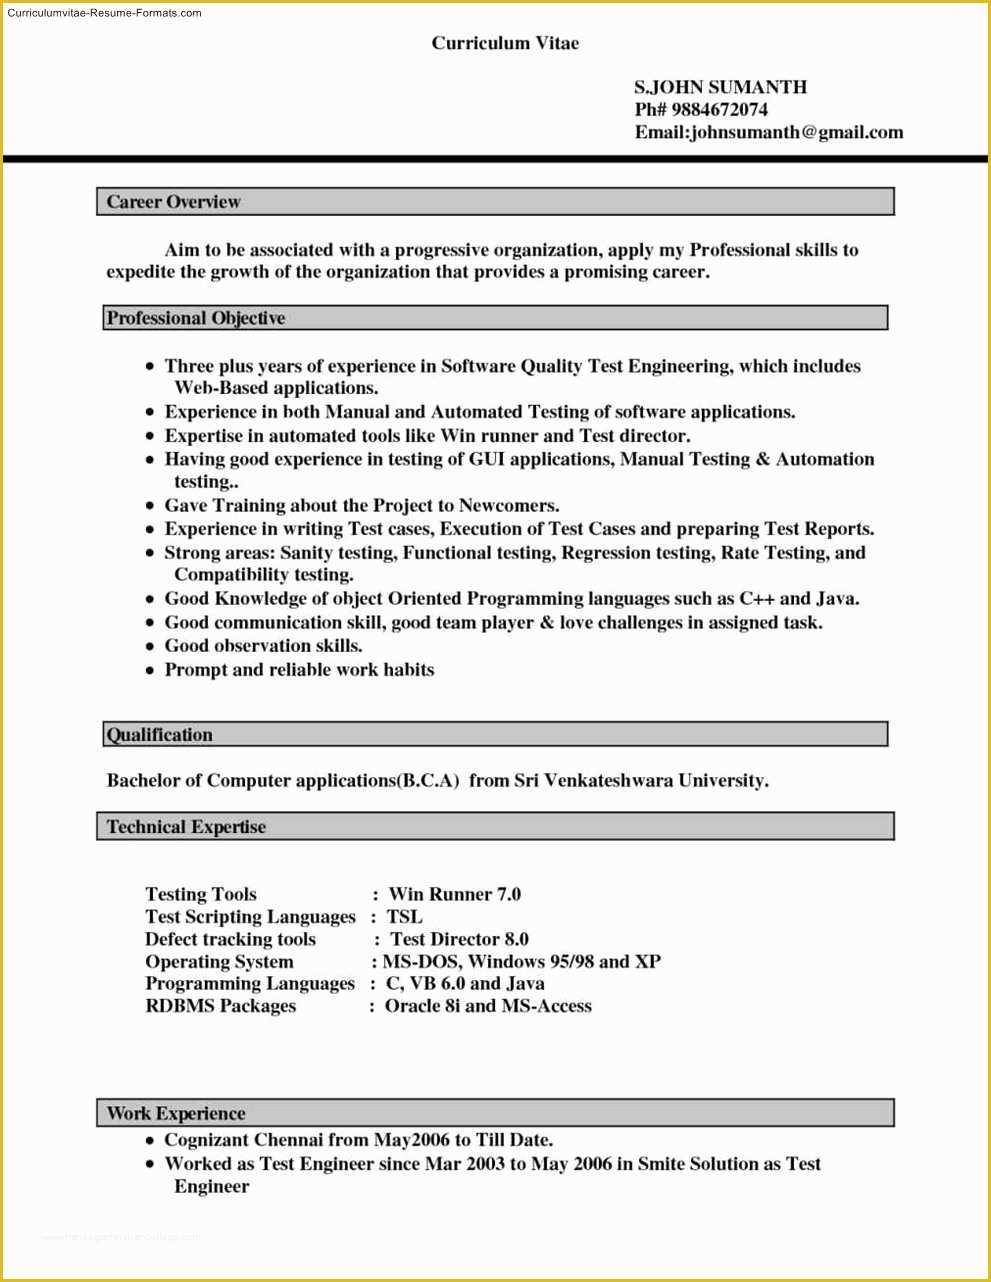 Microsoft Office Resume Templates Free Of Free Resume Templates for Microsoft Word 2007 Free